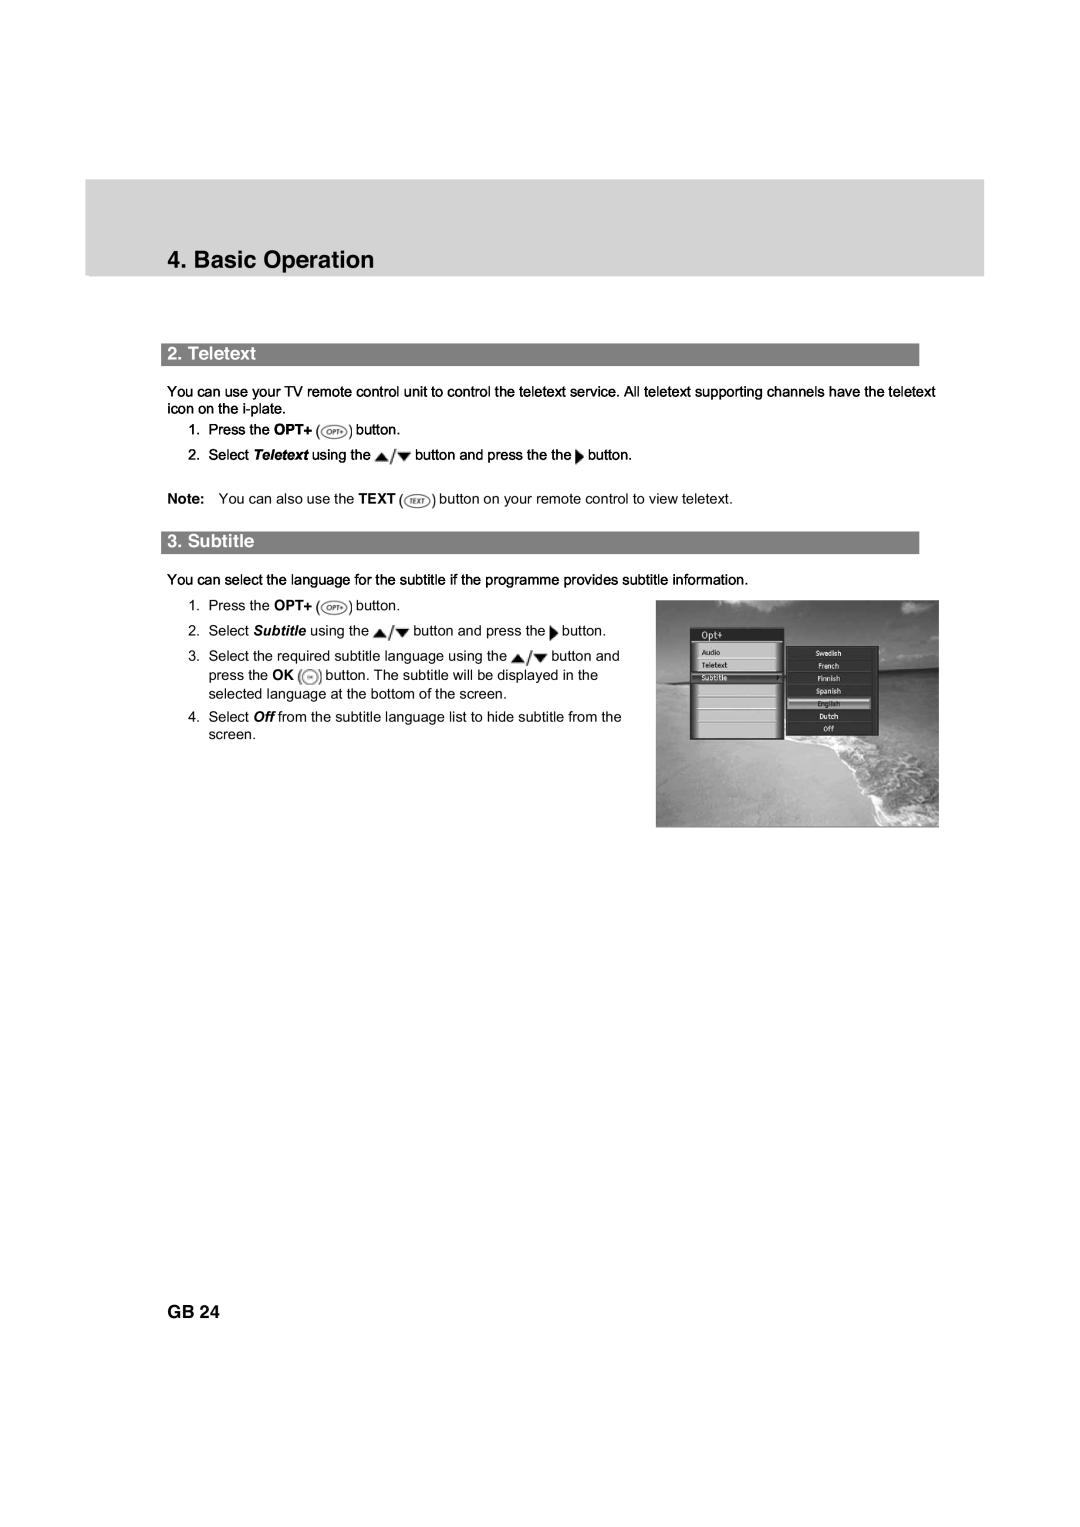 Humax HDCI-2000 manual Teletext, Subtitle, Basic Operation 